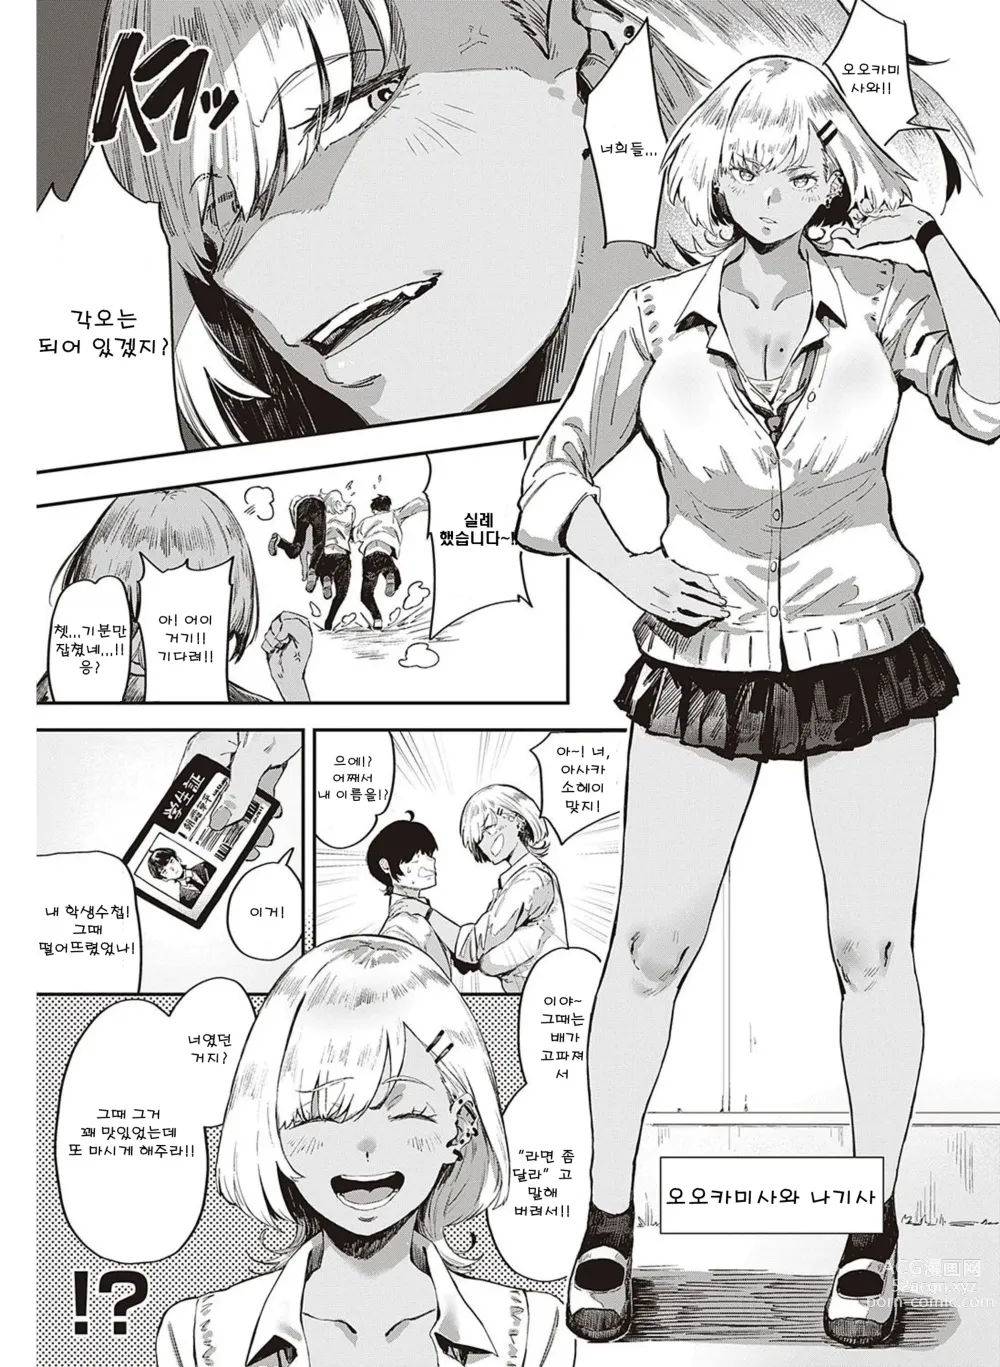 Page 7 of manga Nagisa no in-gaeshi